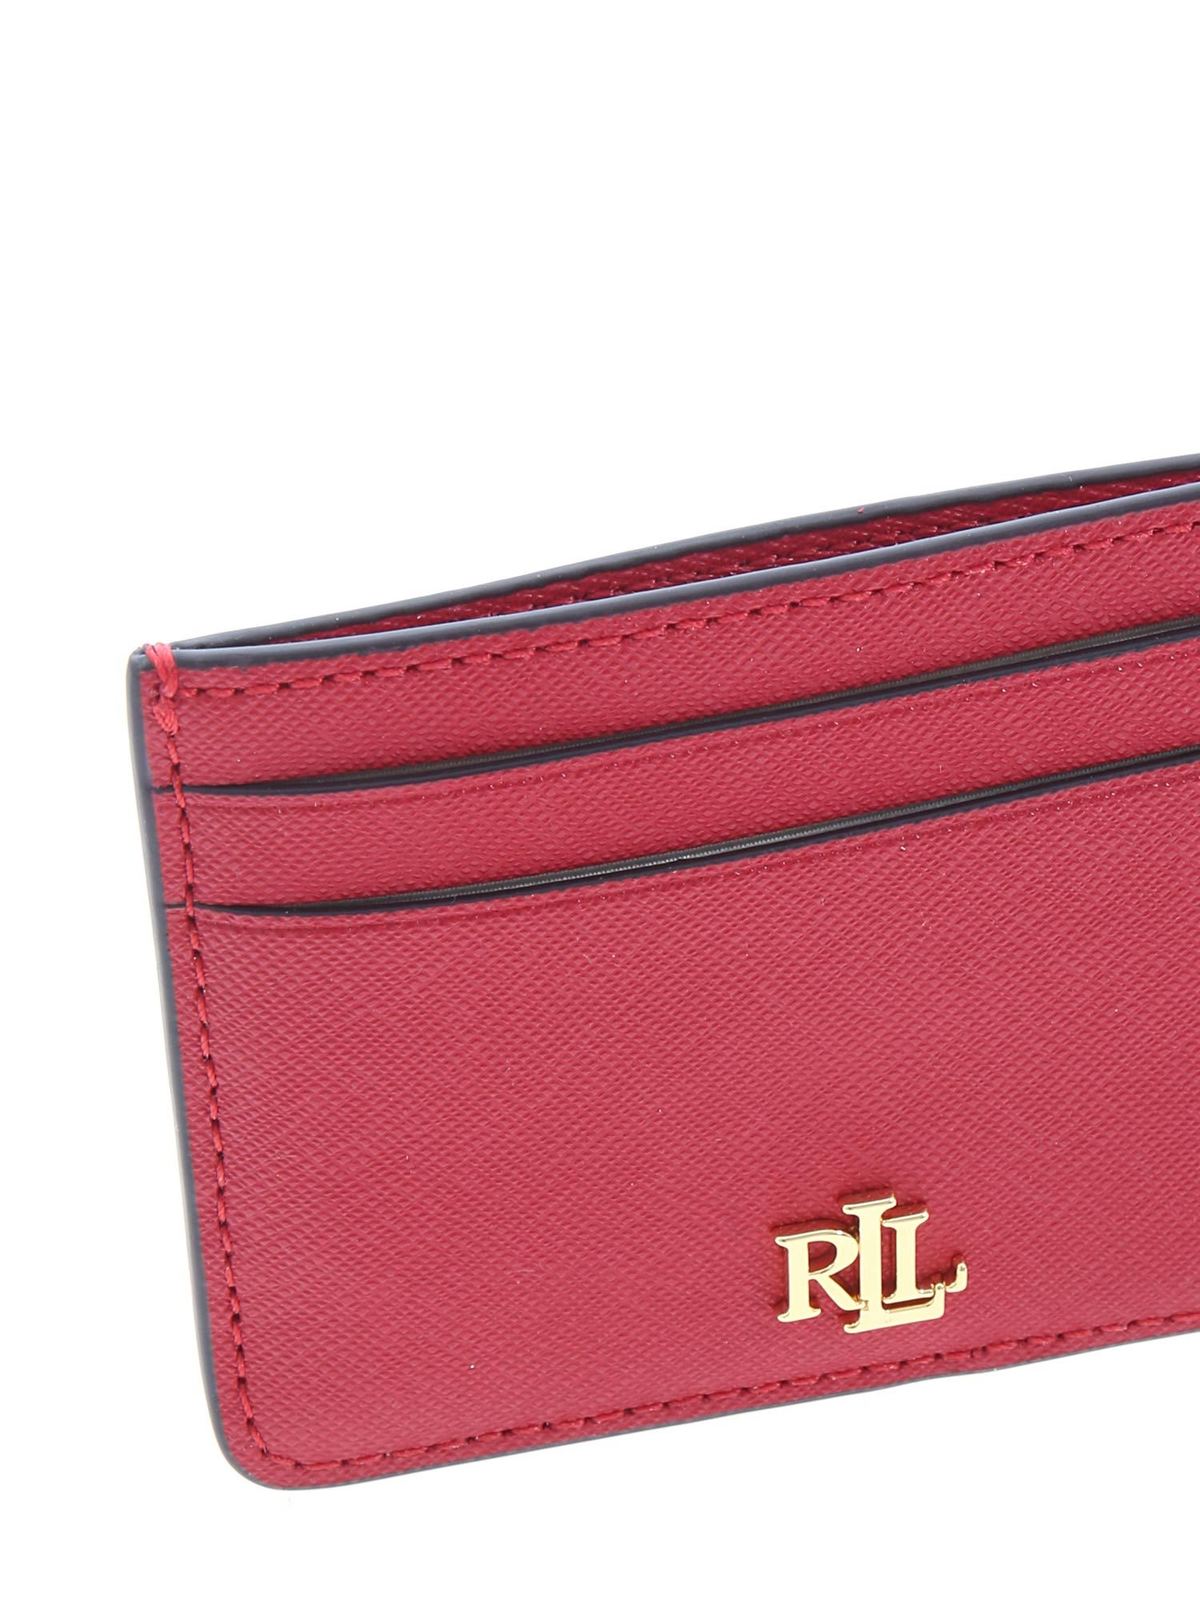 Lauren Ralph Lauren, Bags, Lauren Ralph Lauren Red Saffiano Genuine  Leather Shoulder Bag Purse